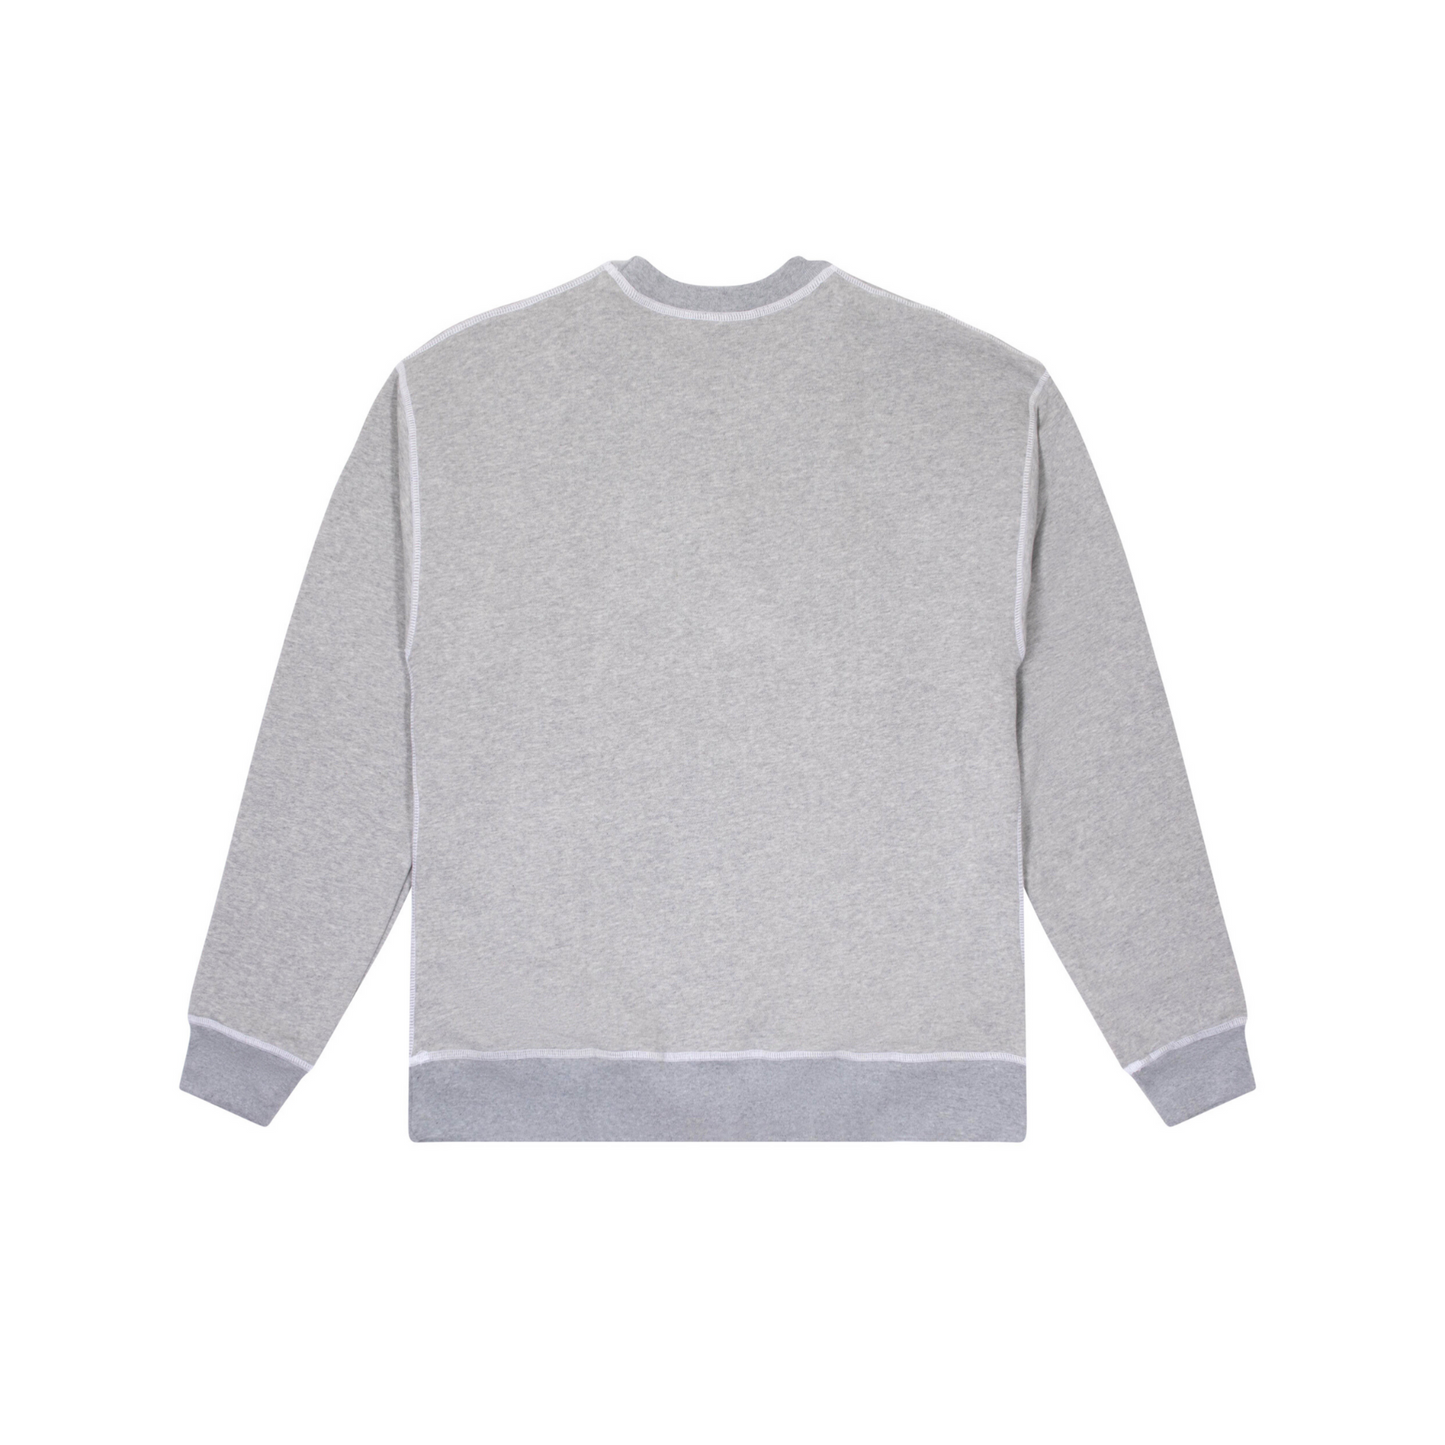 SWC 2 90s Sweatshirt - Marl Grey Reverse Stitch